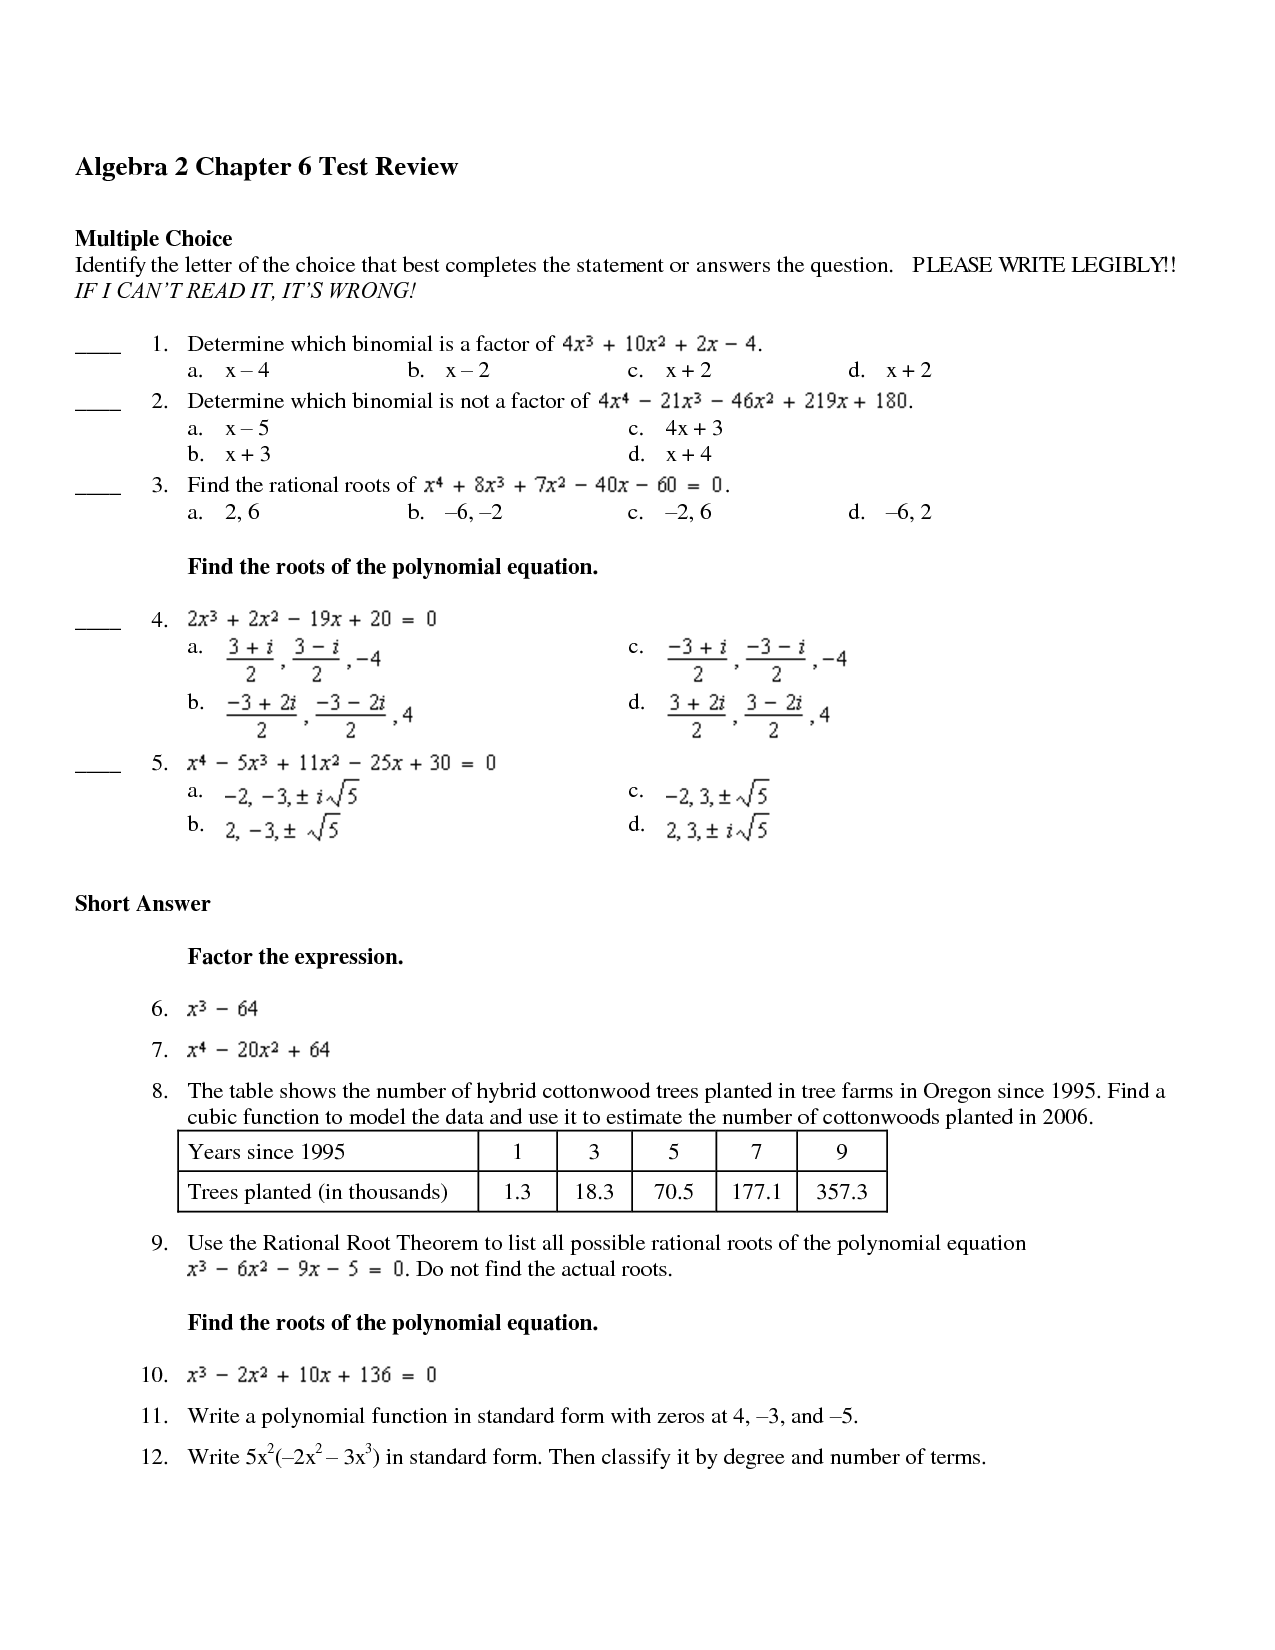 Algebra 1 Review Worksheets 32